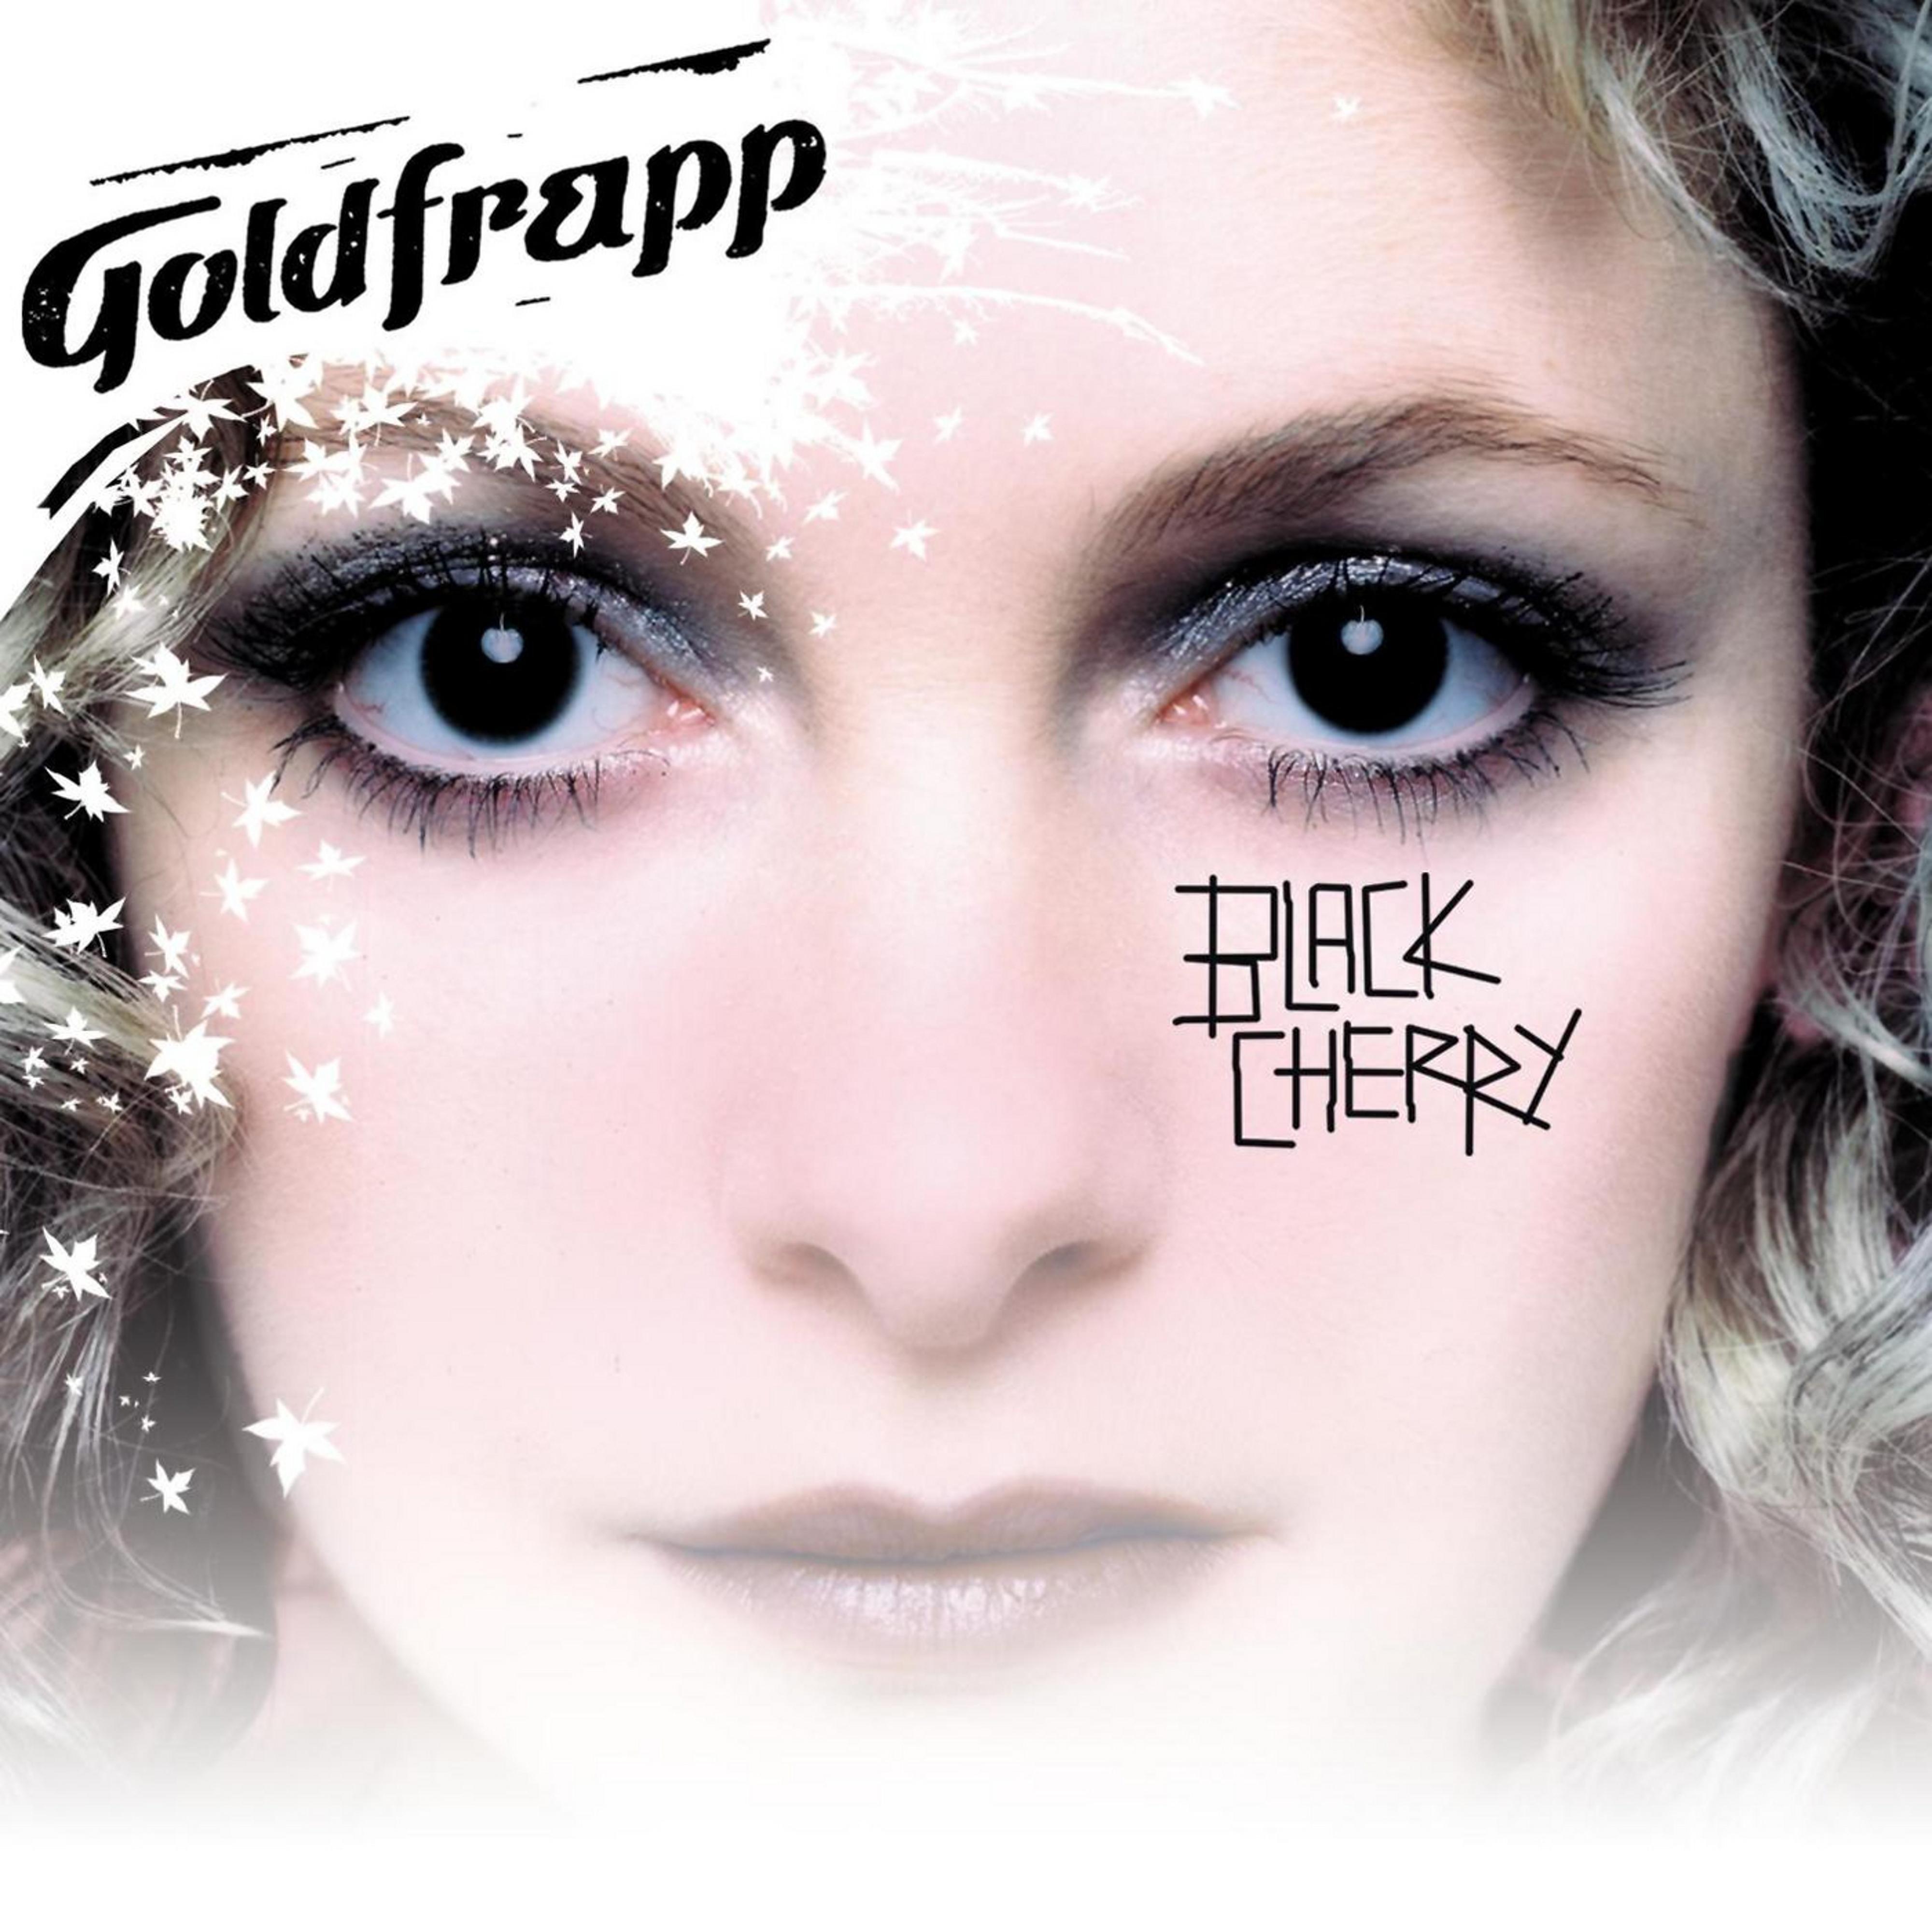 Goldfrapp - Black Cherry (M83 Remix)